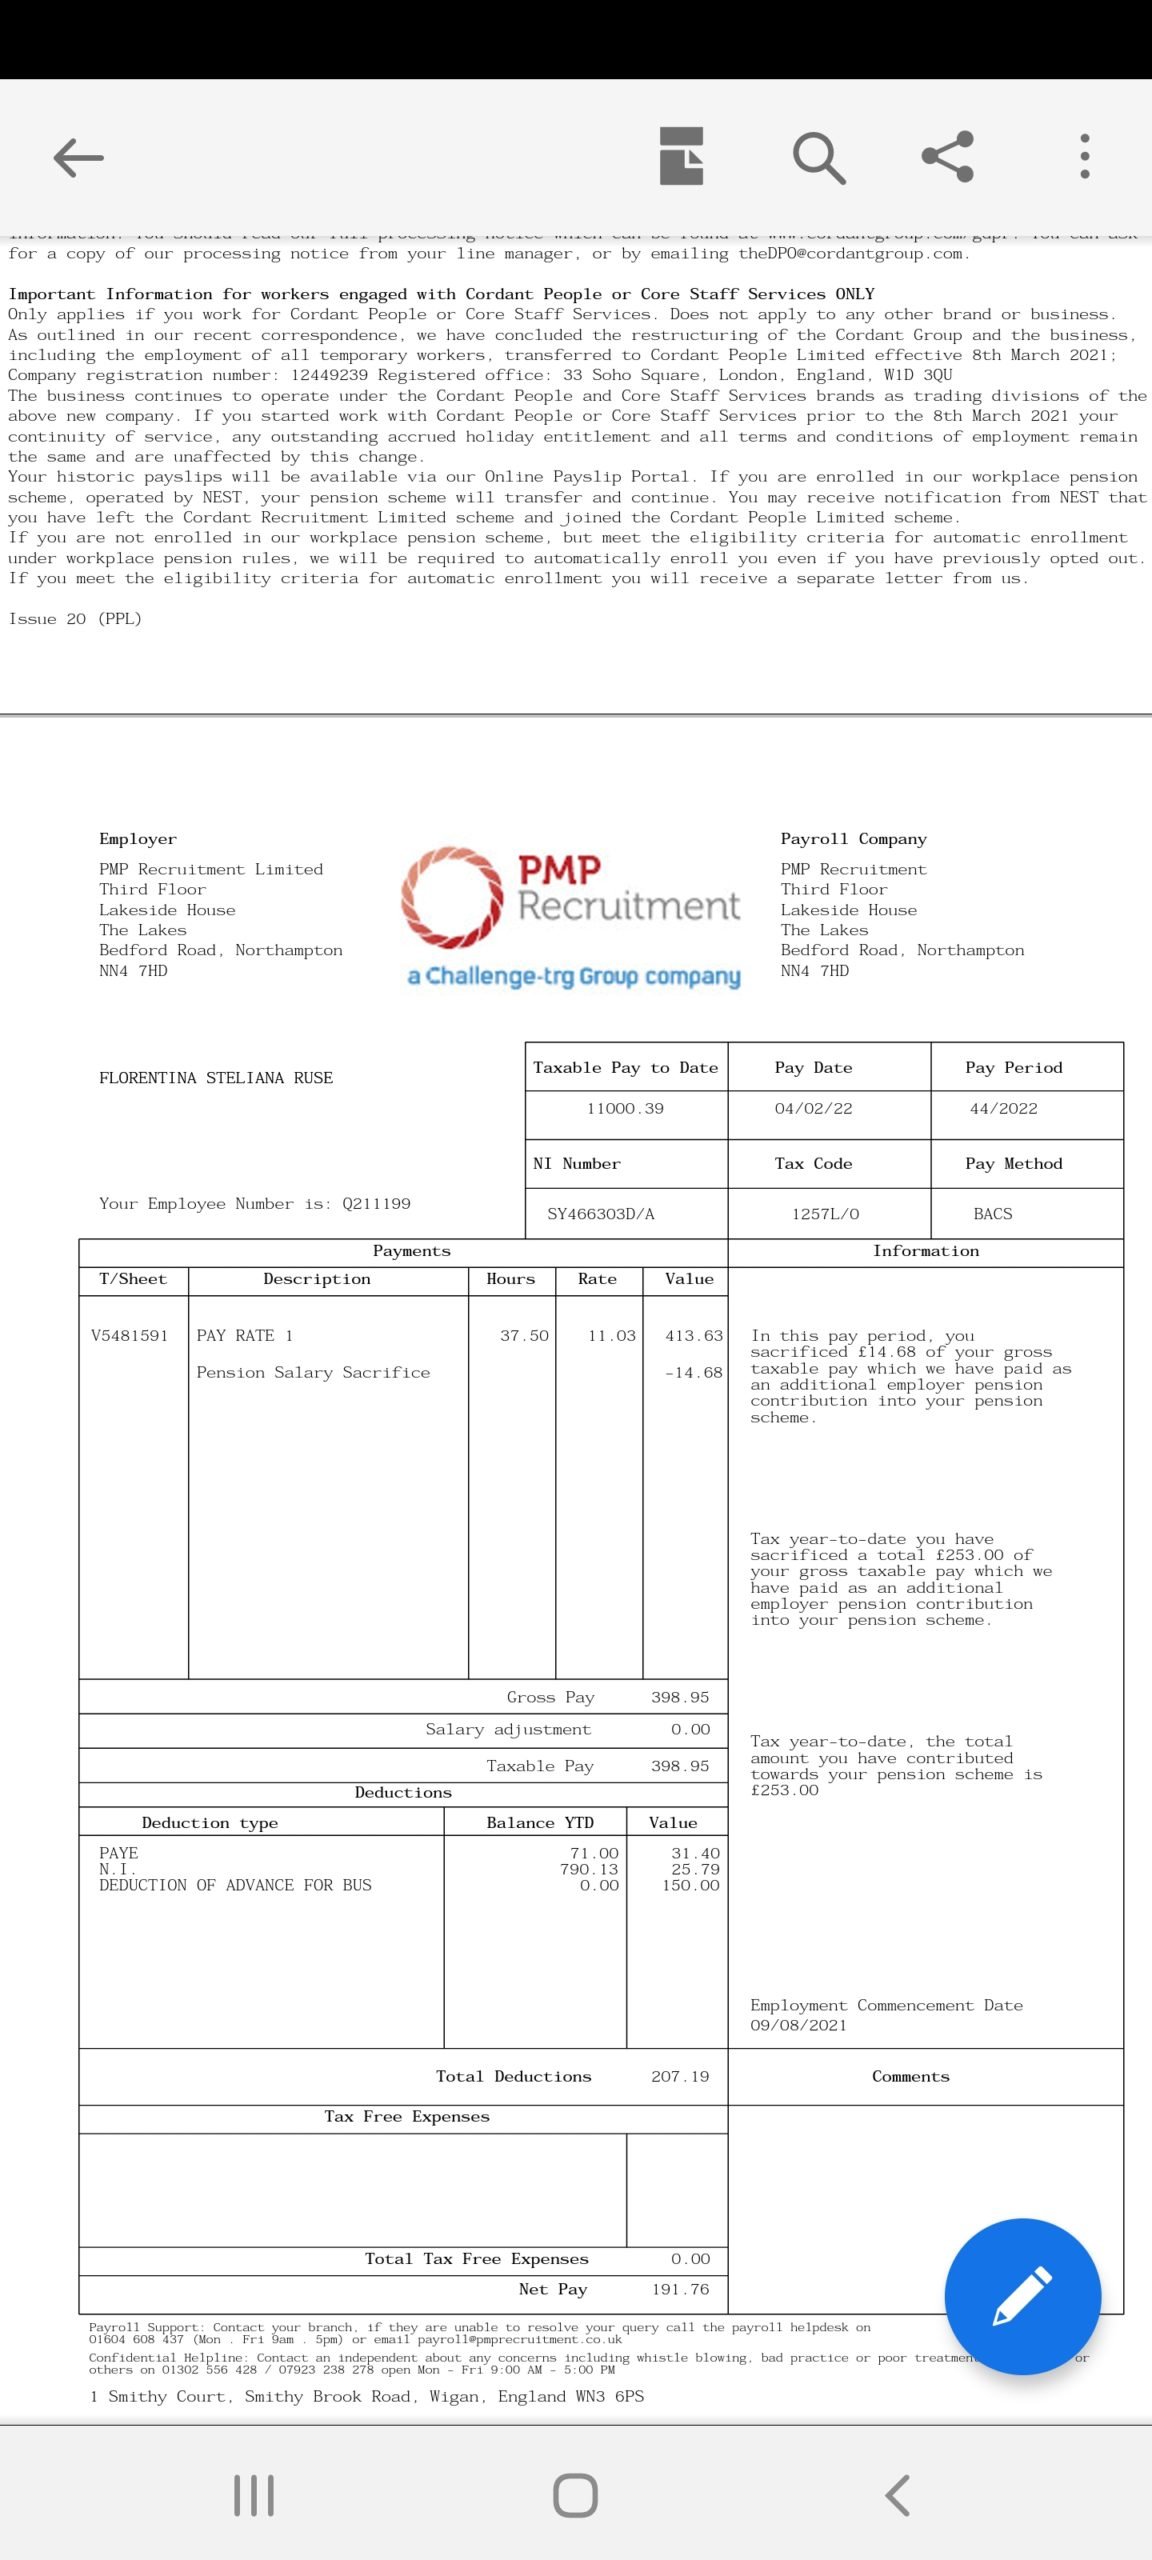 PMP Recruitment complaint wrong payment